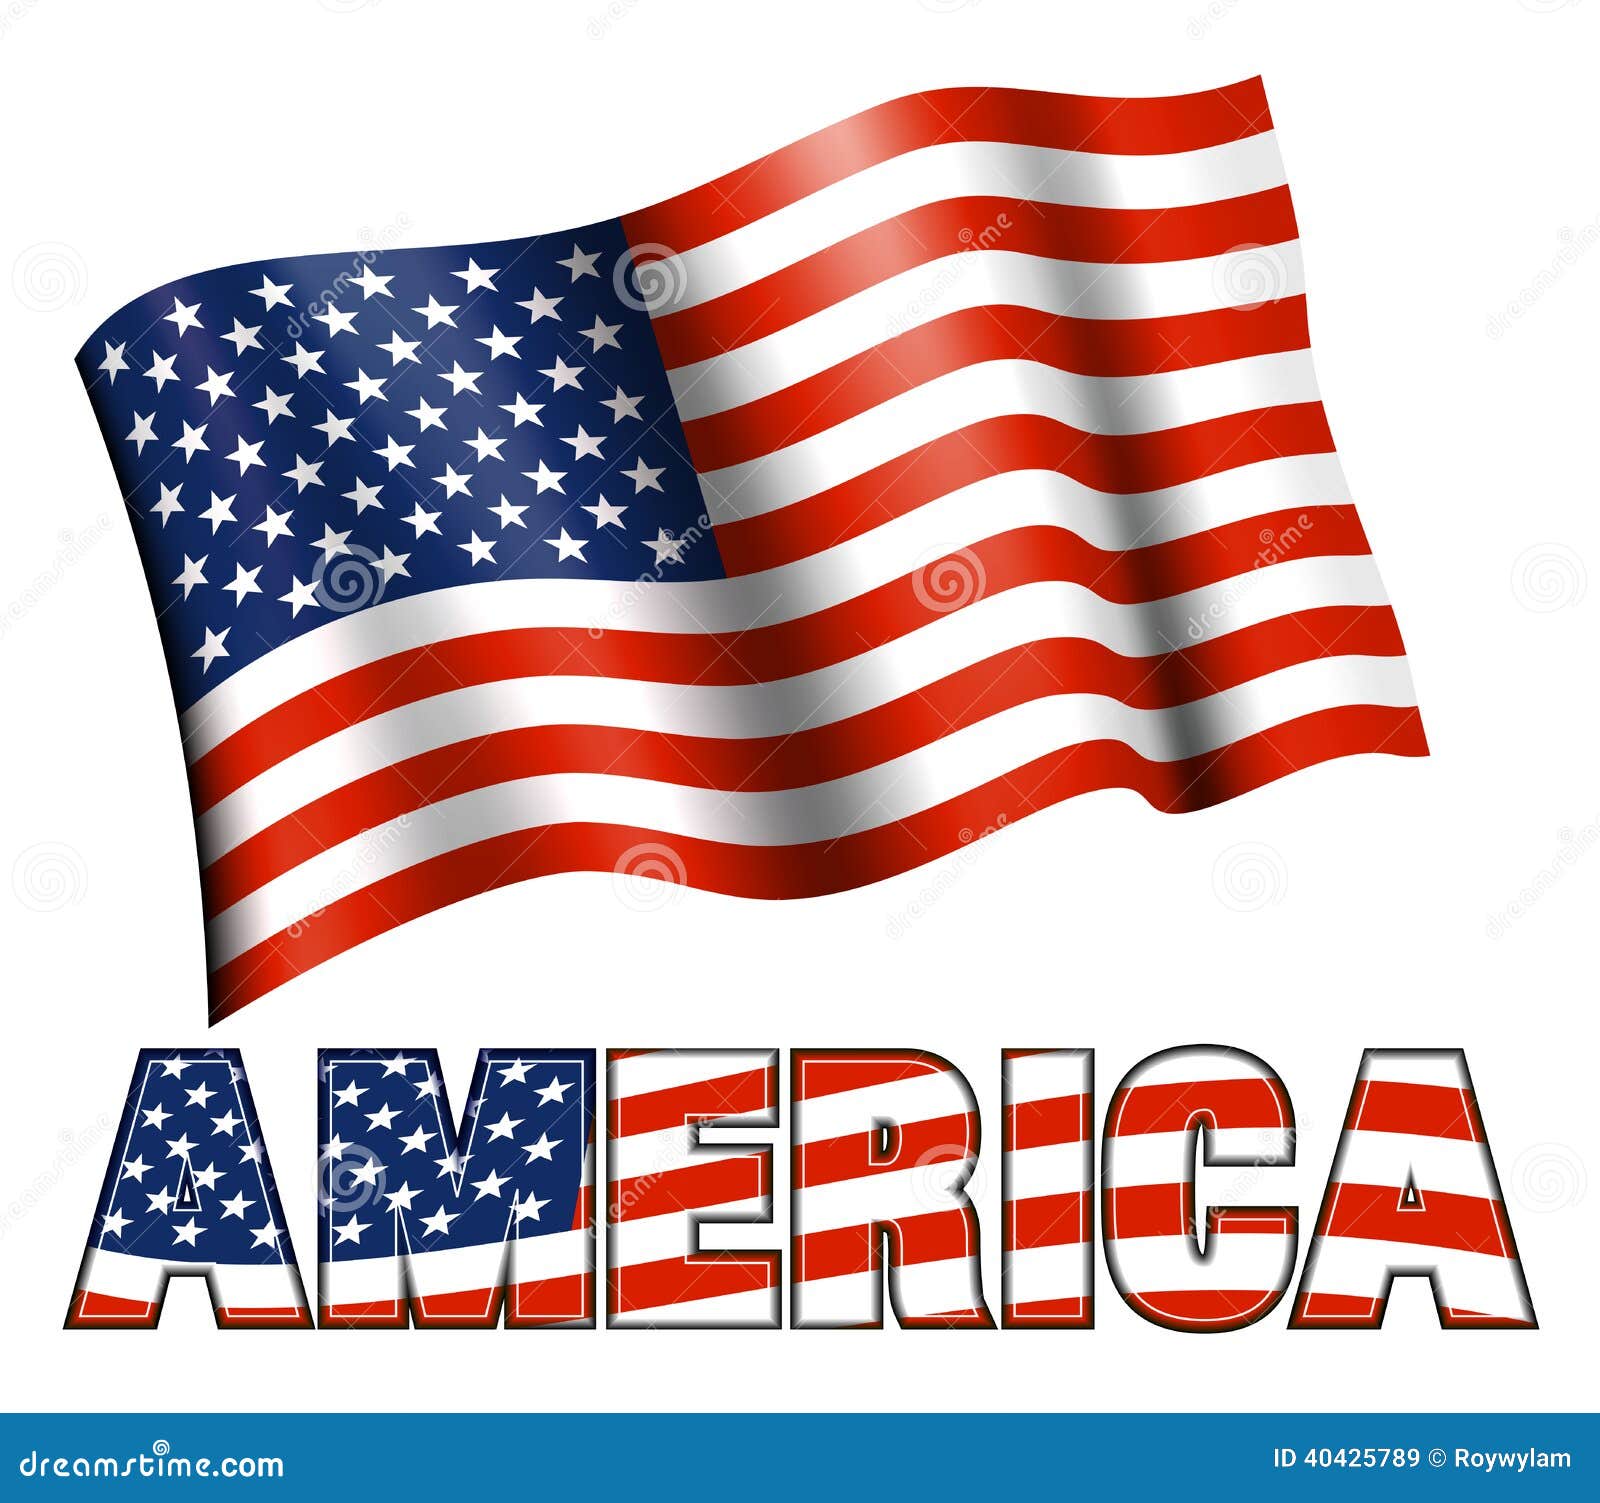 https://thumbs.dreamstime.com/z/american-flag-america-stars-stripes-patriotic-banner-usa-40425789.jpg